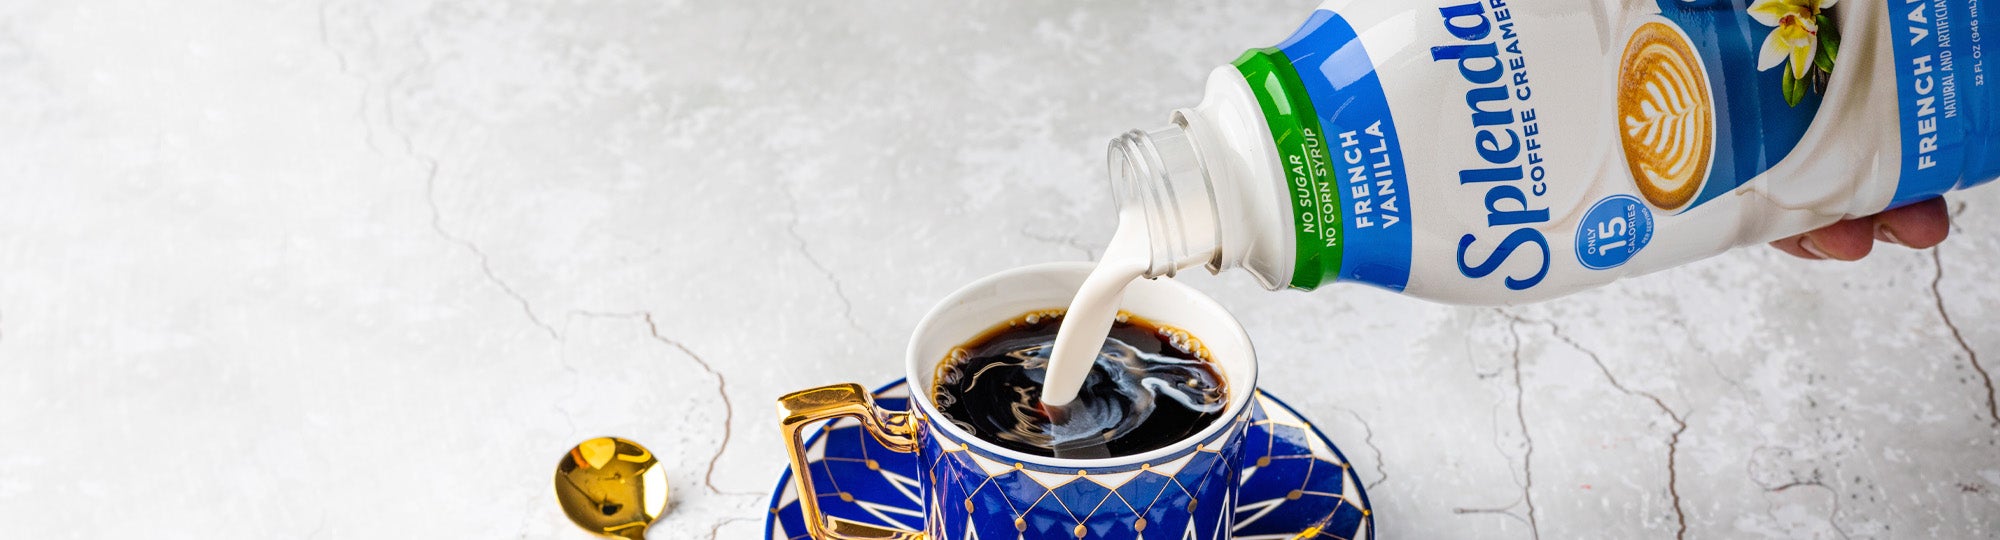 Pouring Splenda Coffee Creamer in Coffee